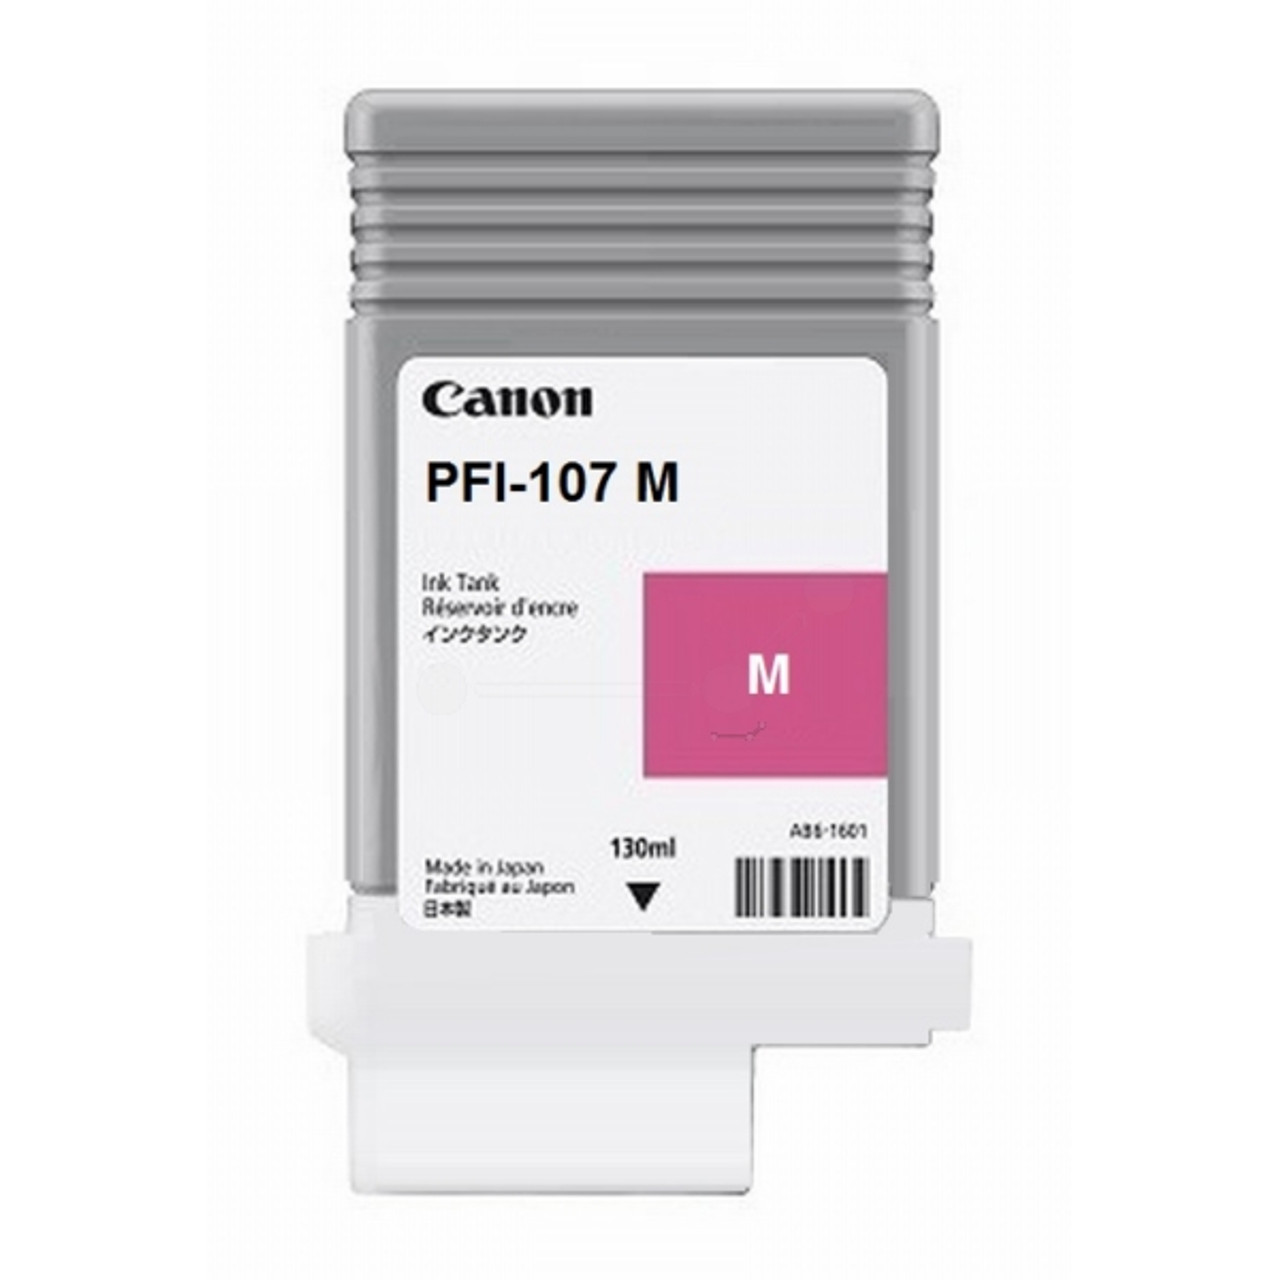 Canon 6707B001 PFI-107 M Magenta Ink Cartridge 9to5 Supplies